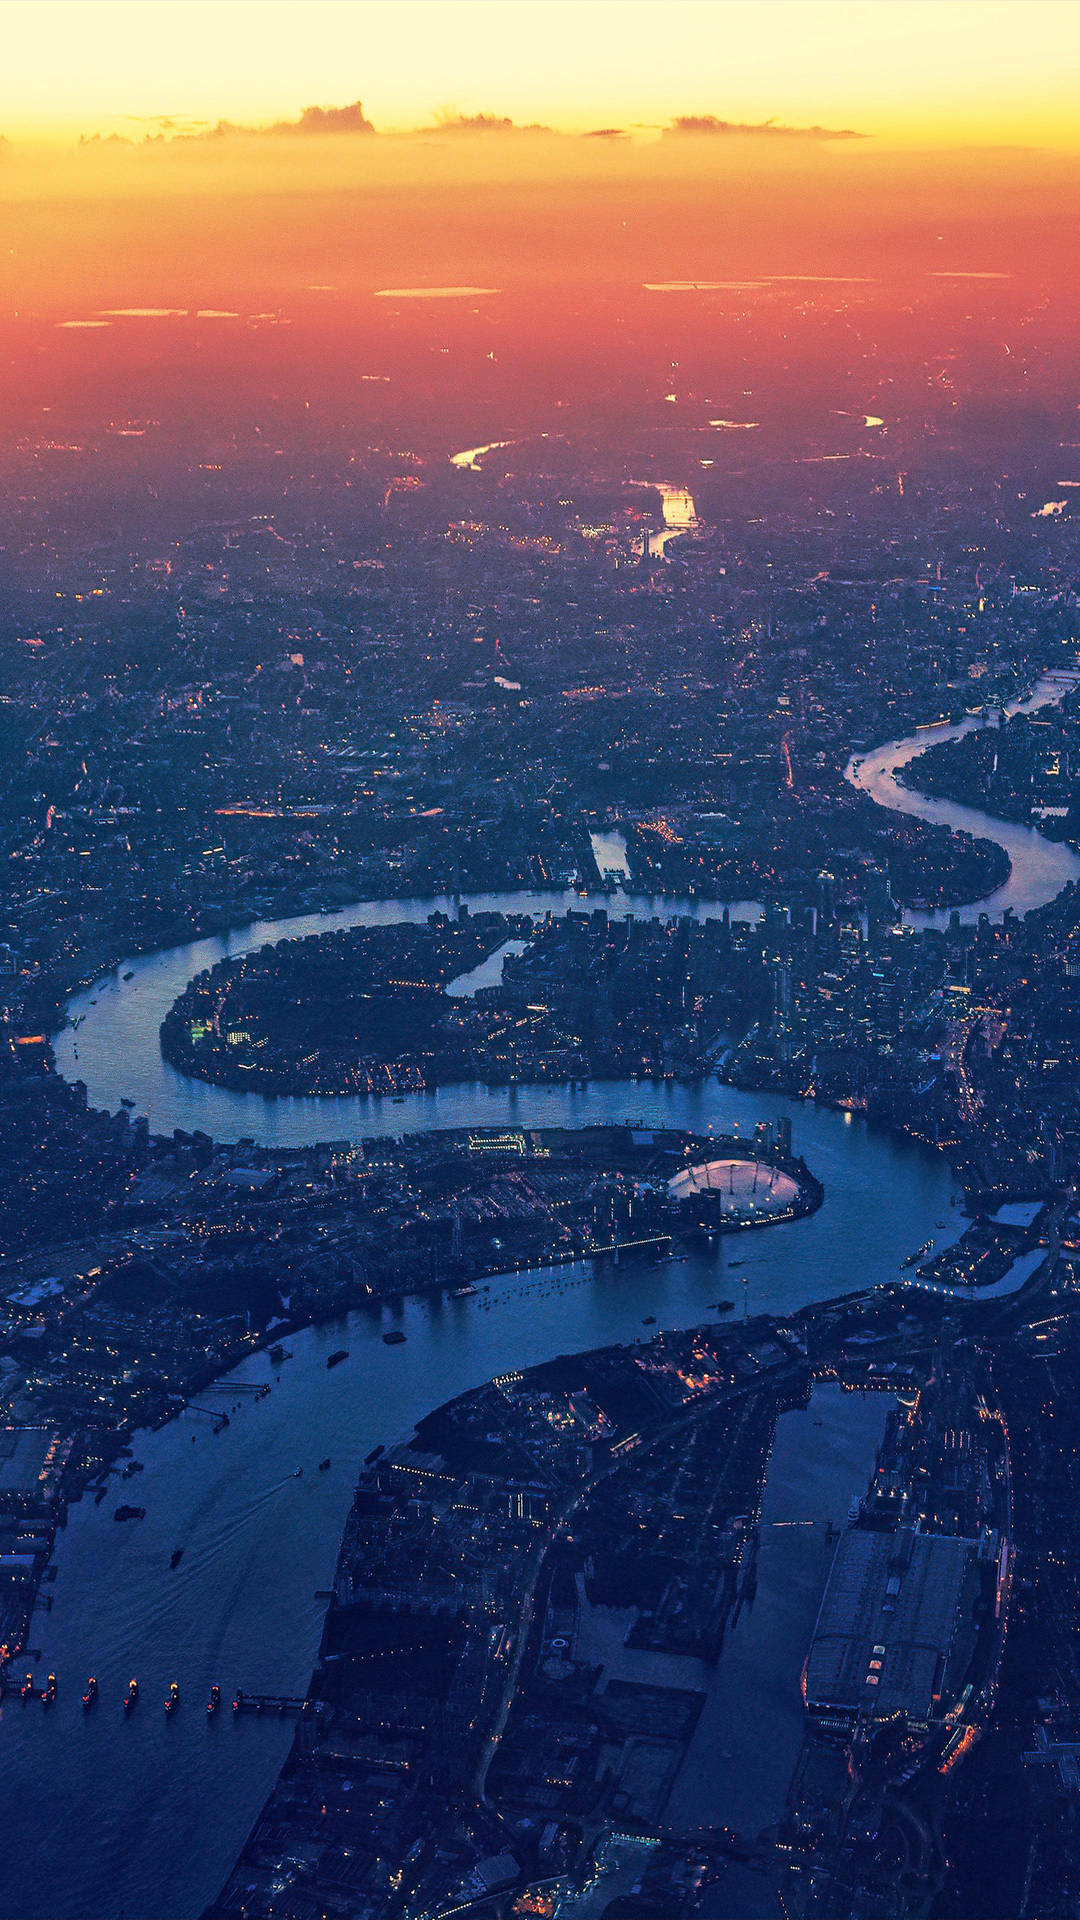 River Thames 4K Ultra iPhone Aerial Wallpaper: Flyvefoto af River Thames 4K Ultra iPhone Wallpaper